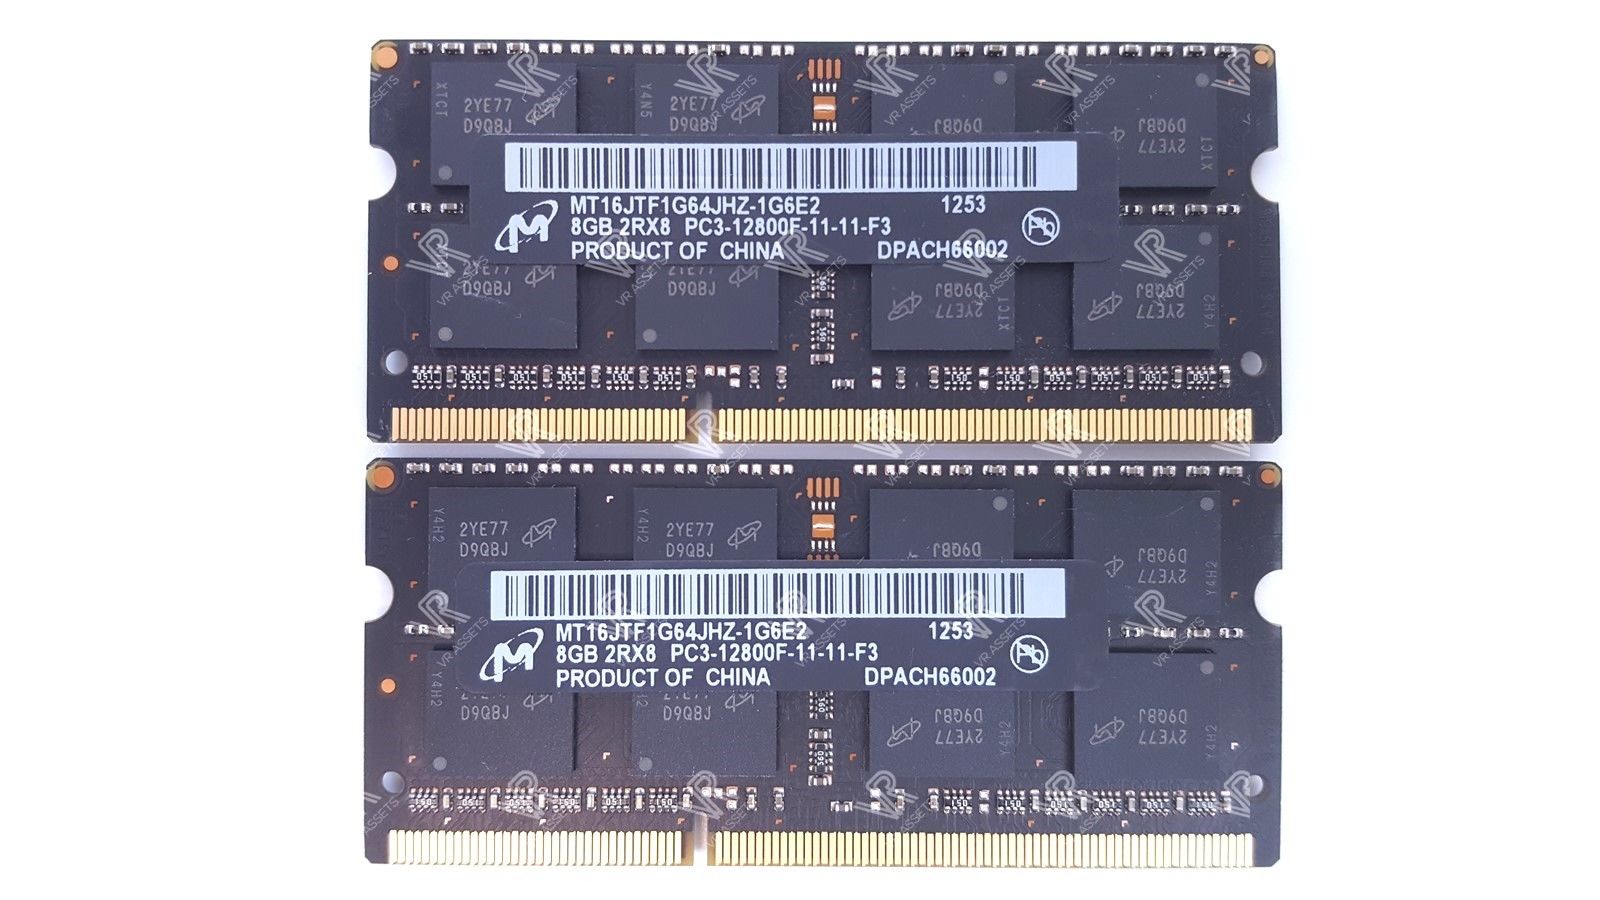 iMac A1419 2012 27" Micron 16GB (2 x 8Gb) PC3-12800F Memory MT16JTF1G64JHZ-1G6E2